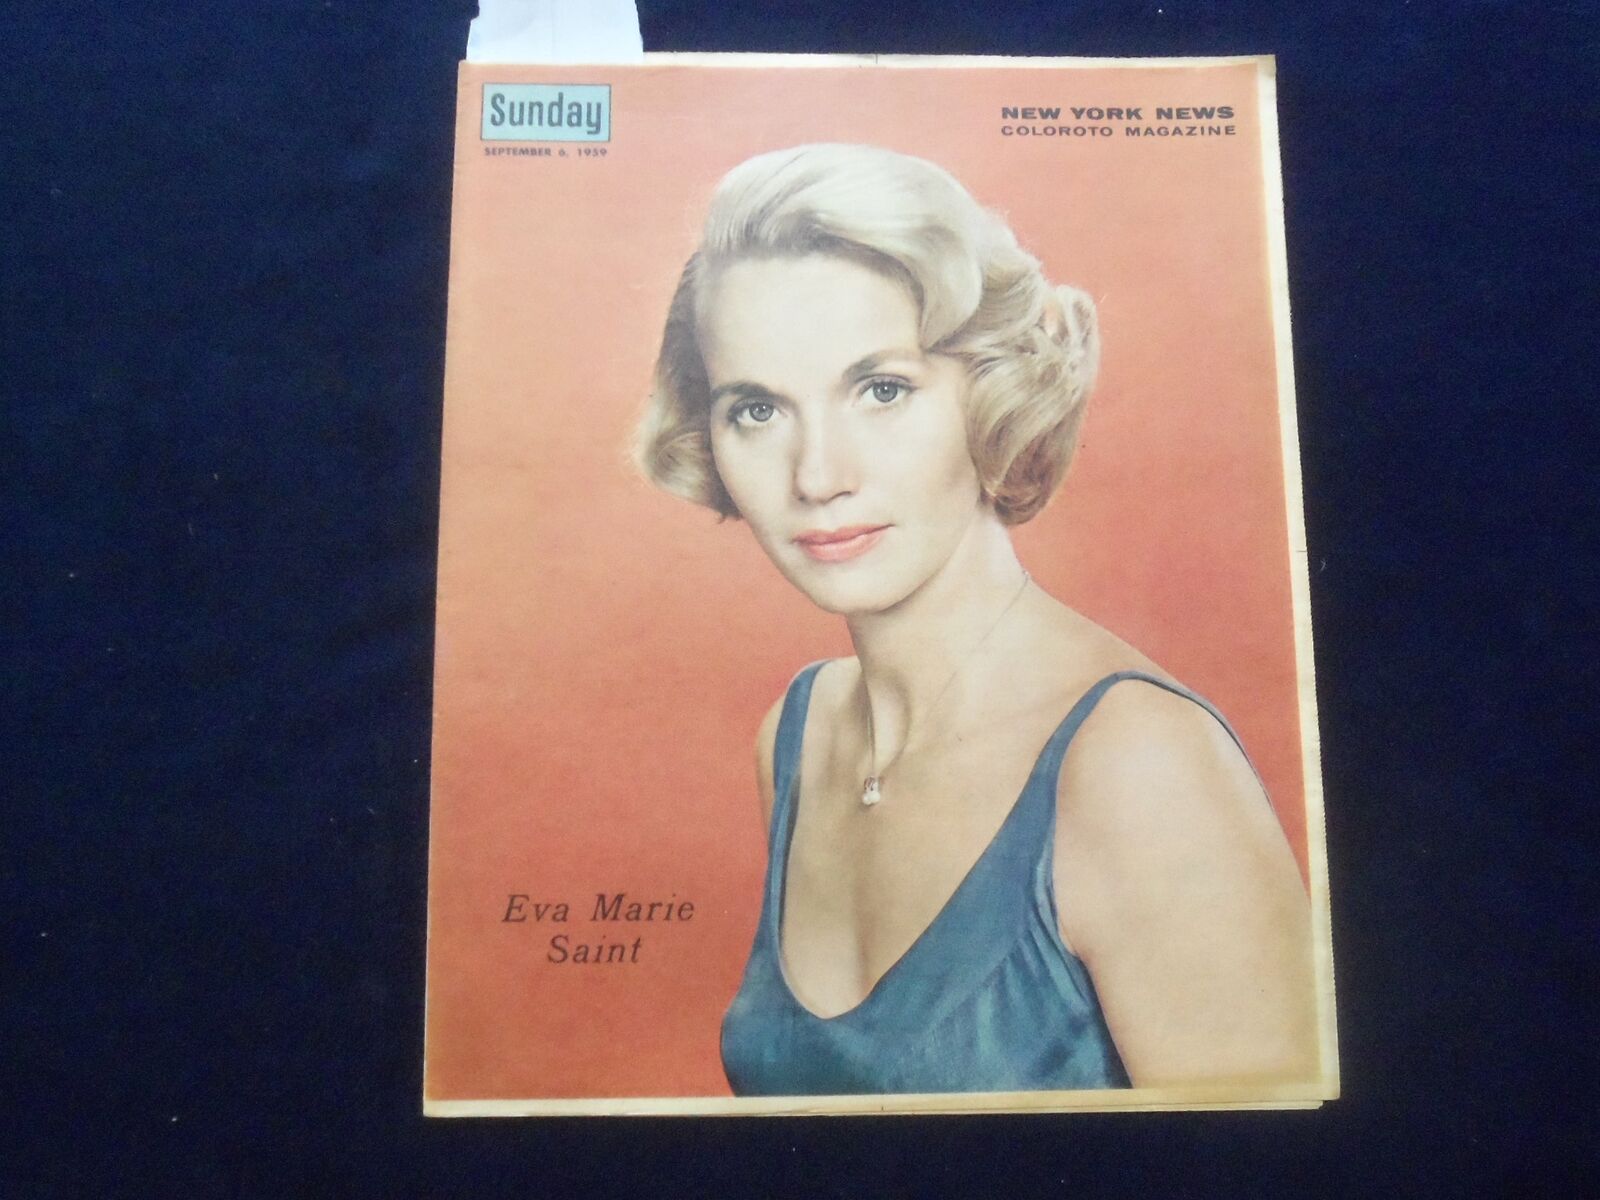 1959 SEP 6 NEW YORK NEWS COLOROTO MAGAZINE SECTION - EVA MARIE SAINT - J 9805